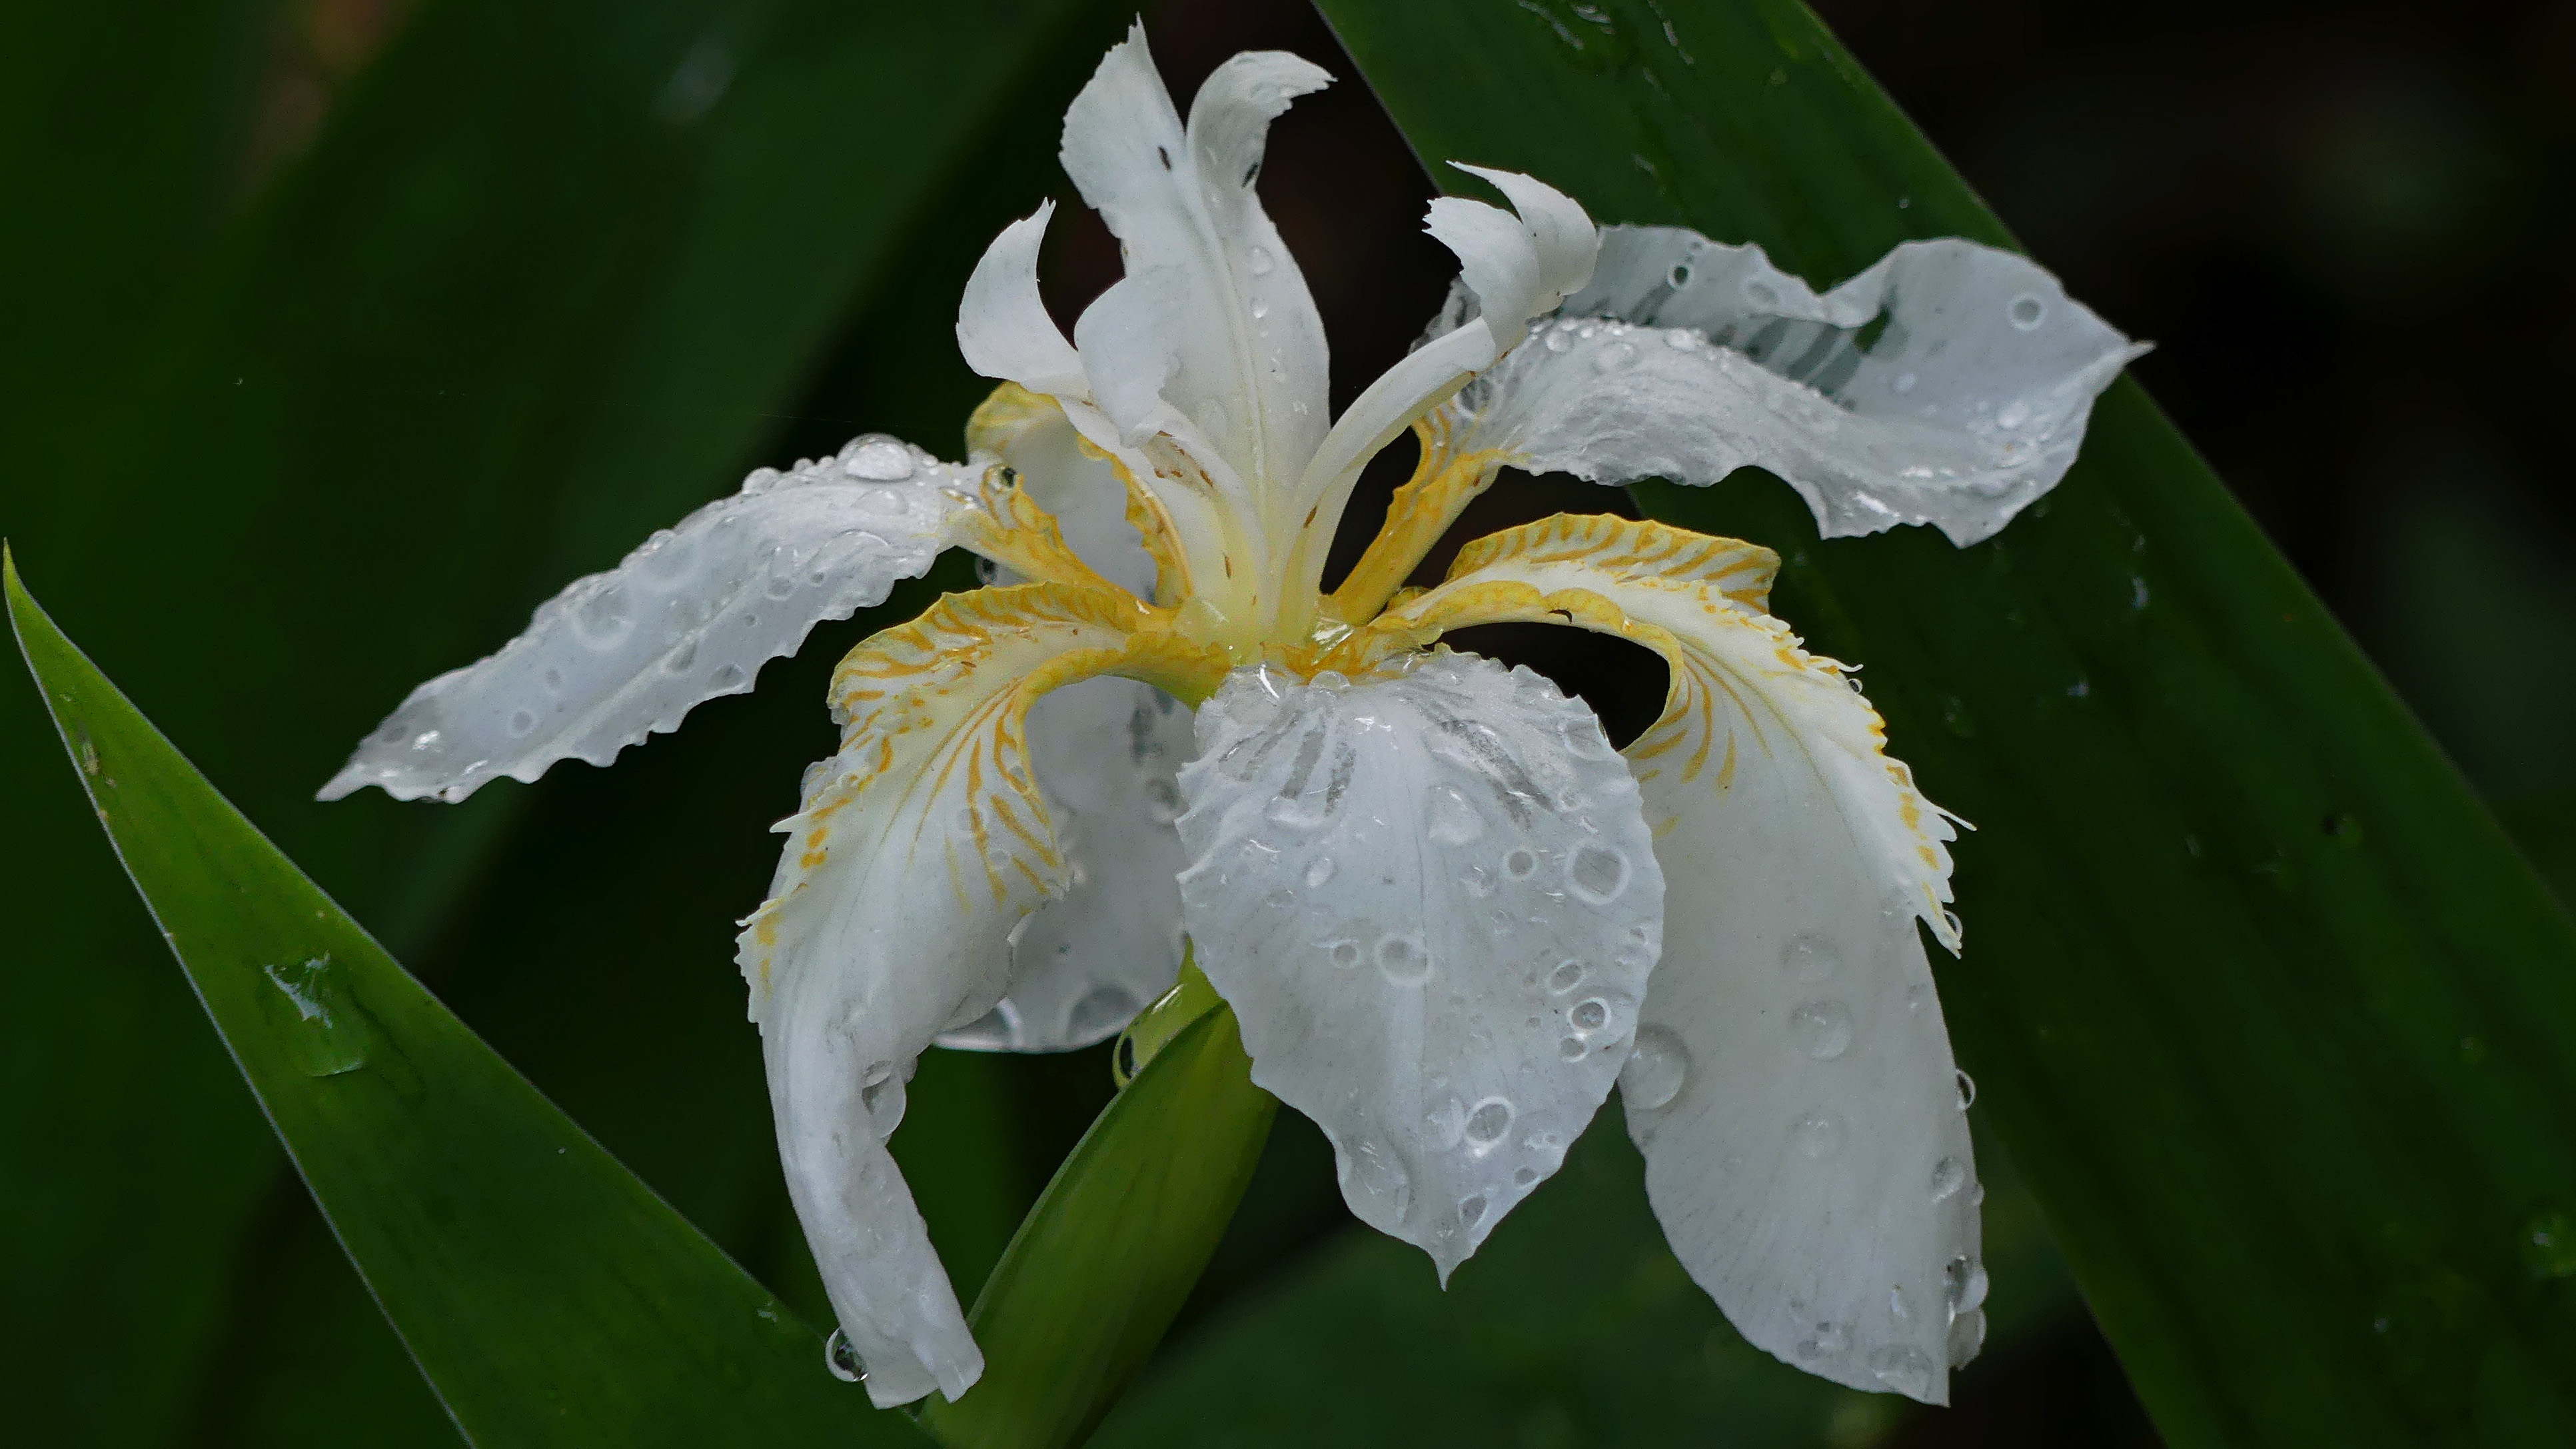 Iris tectorum 'Alba' dappled with water droplets